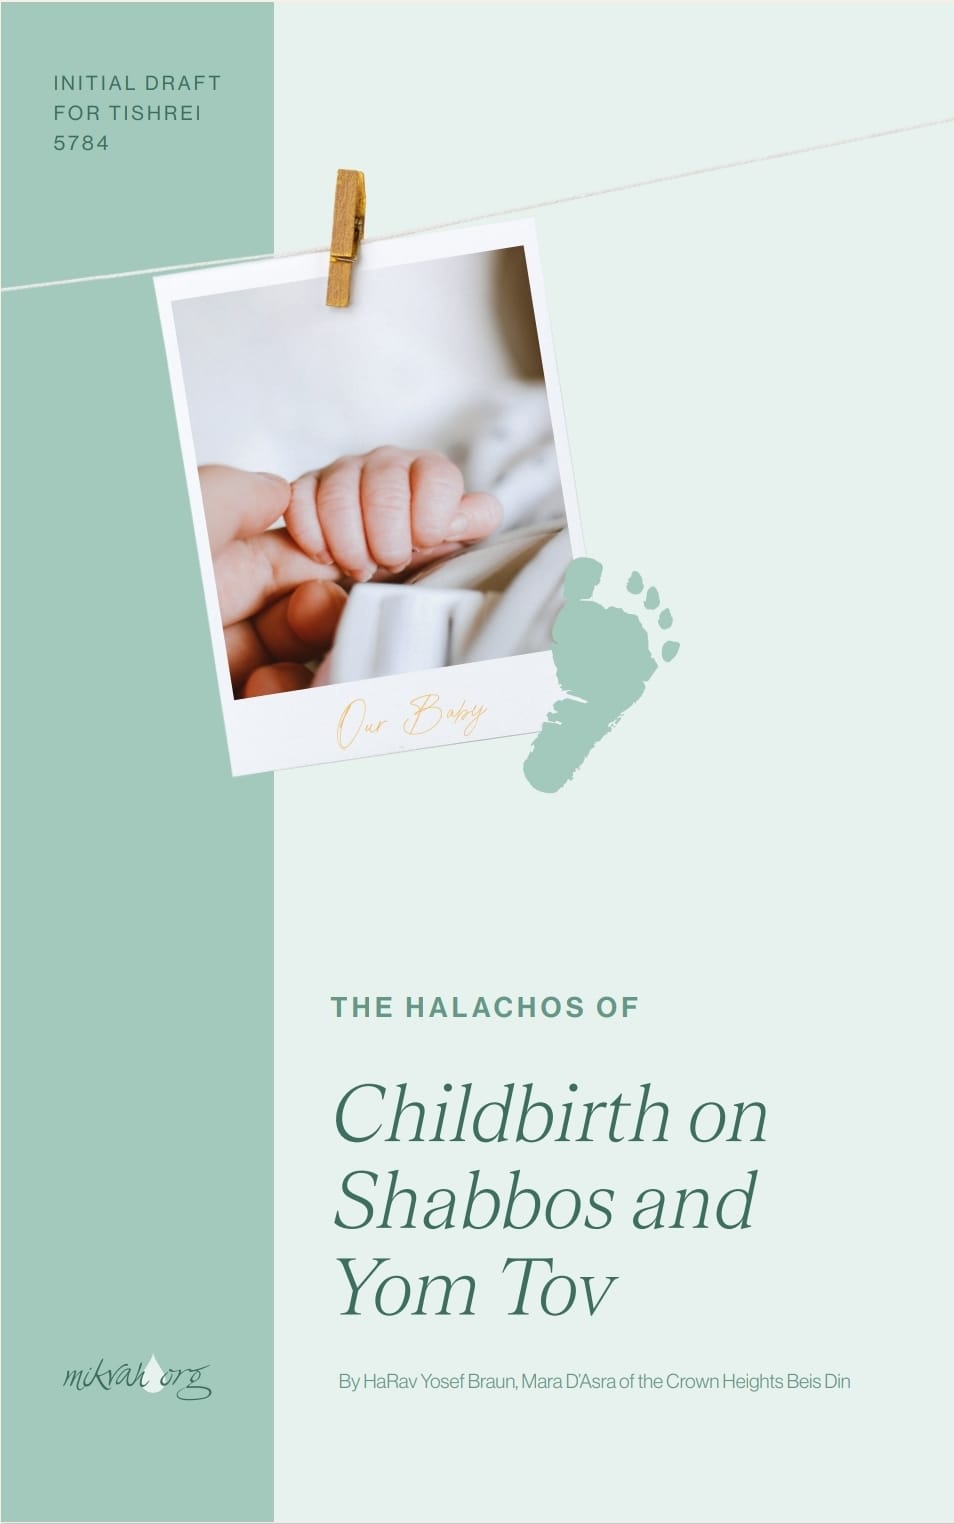 The Halachos of Shabbos and Yom Tov